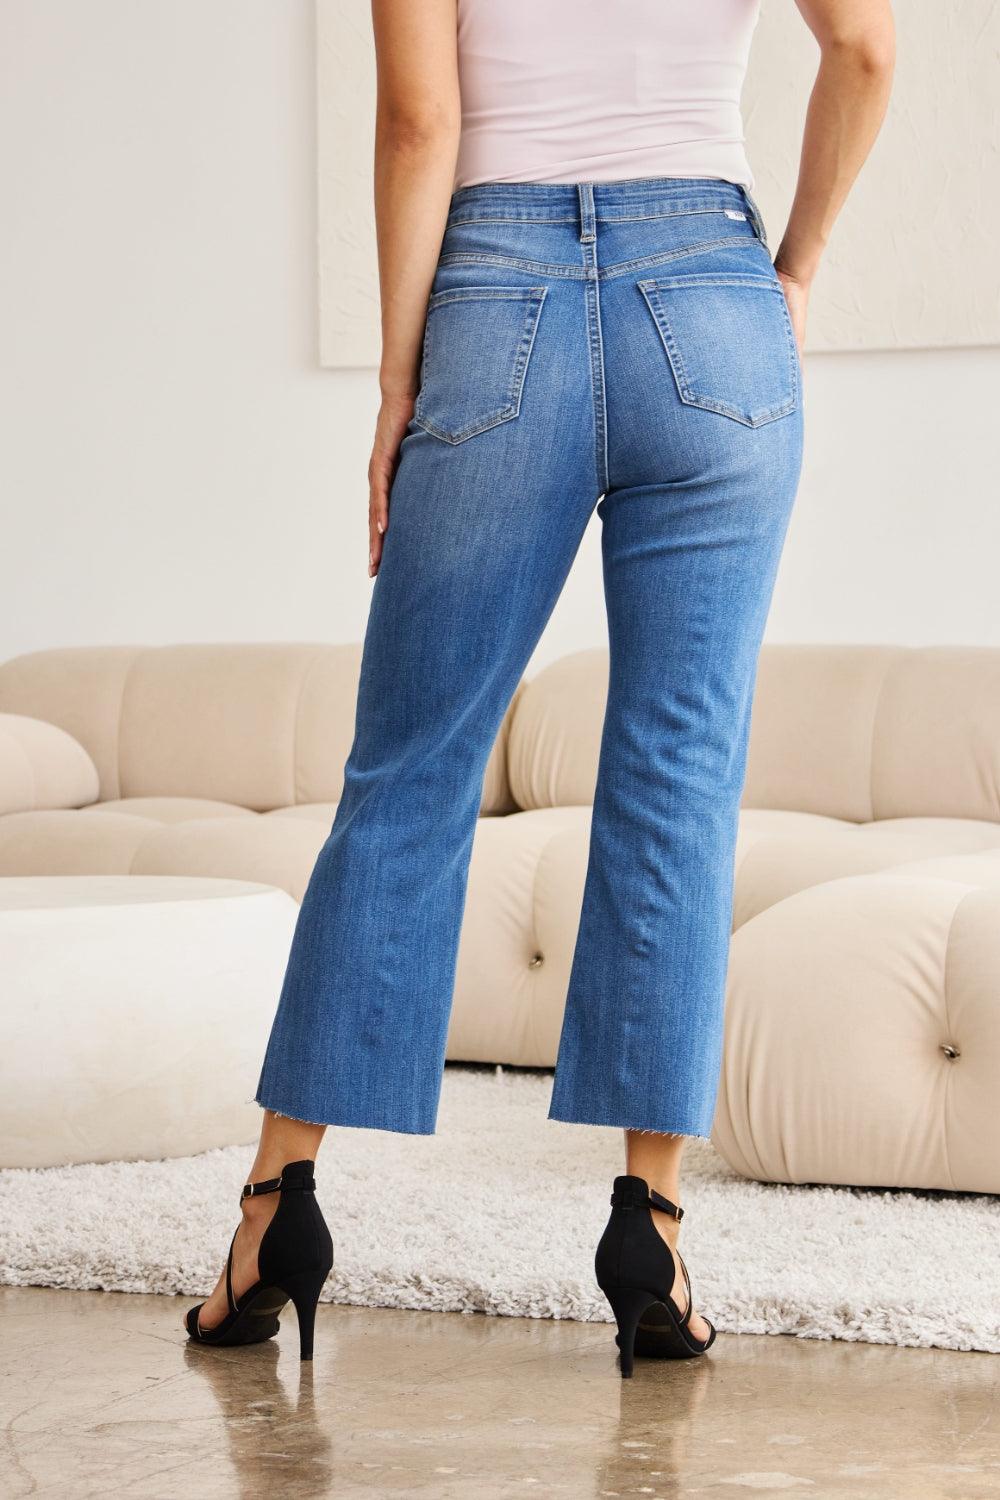 Women's Jeans RFM Mini Mia Full Size Tummy Control High Waist Jeans